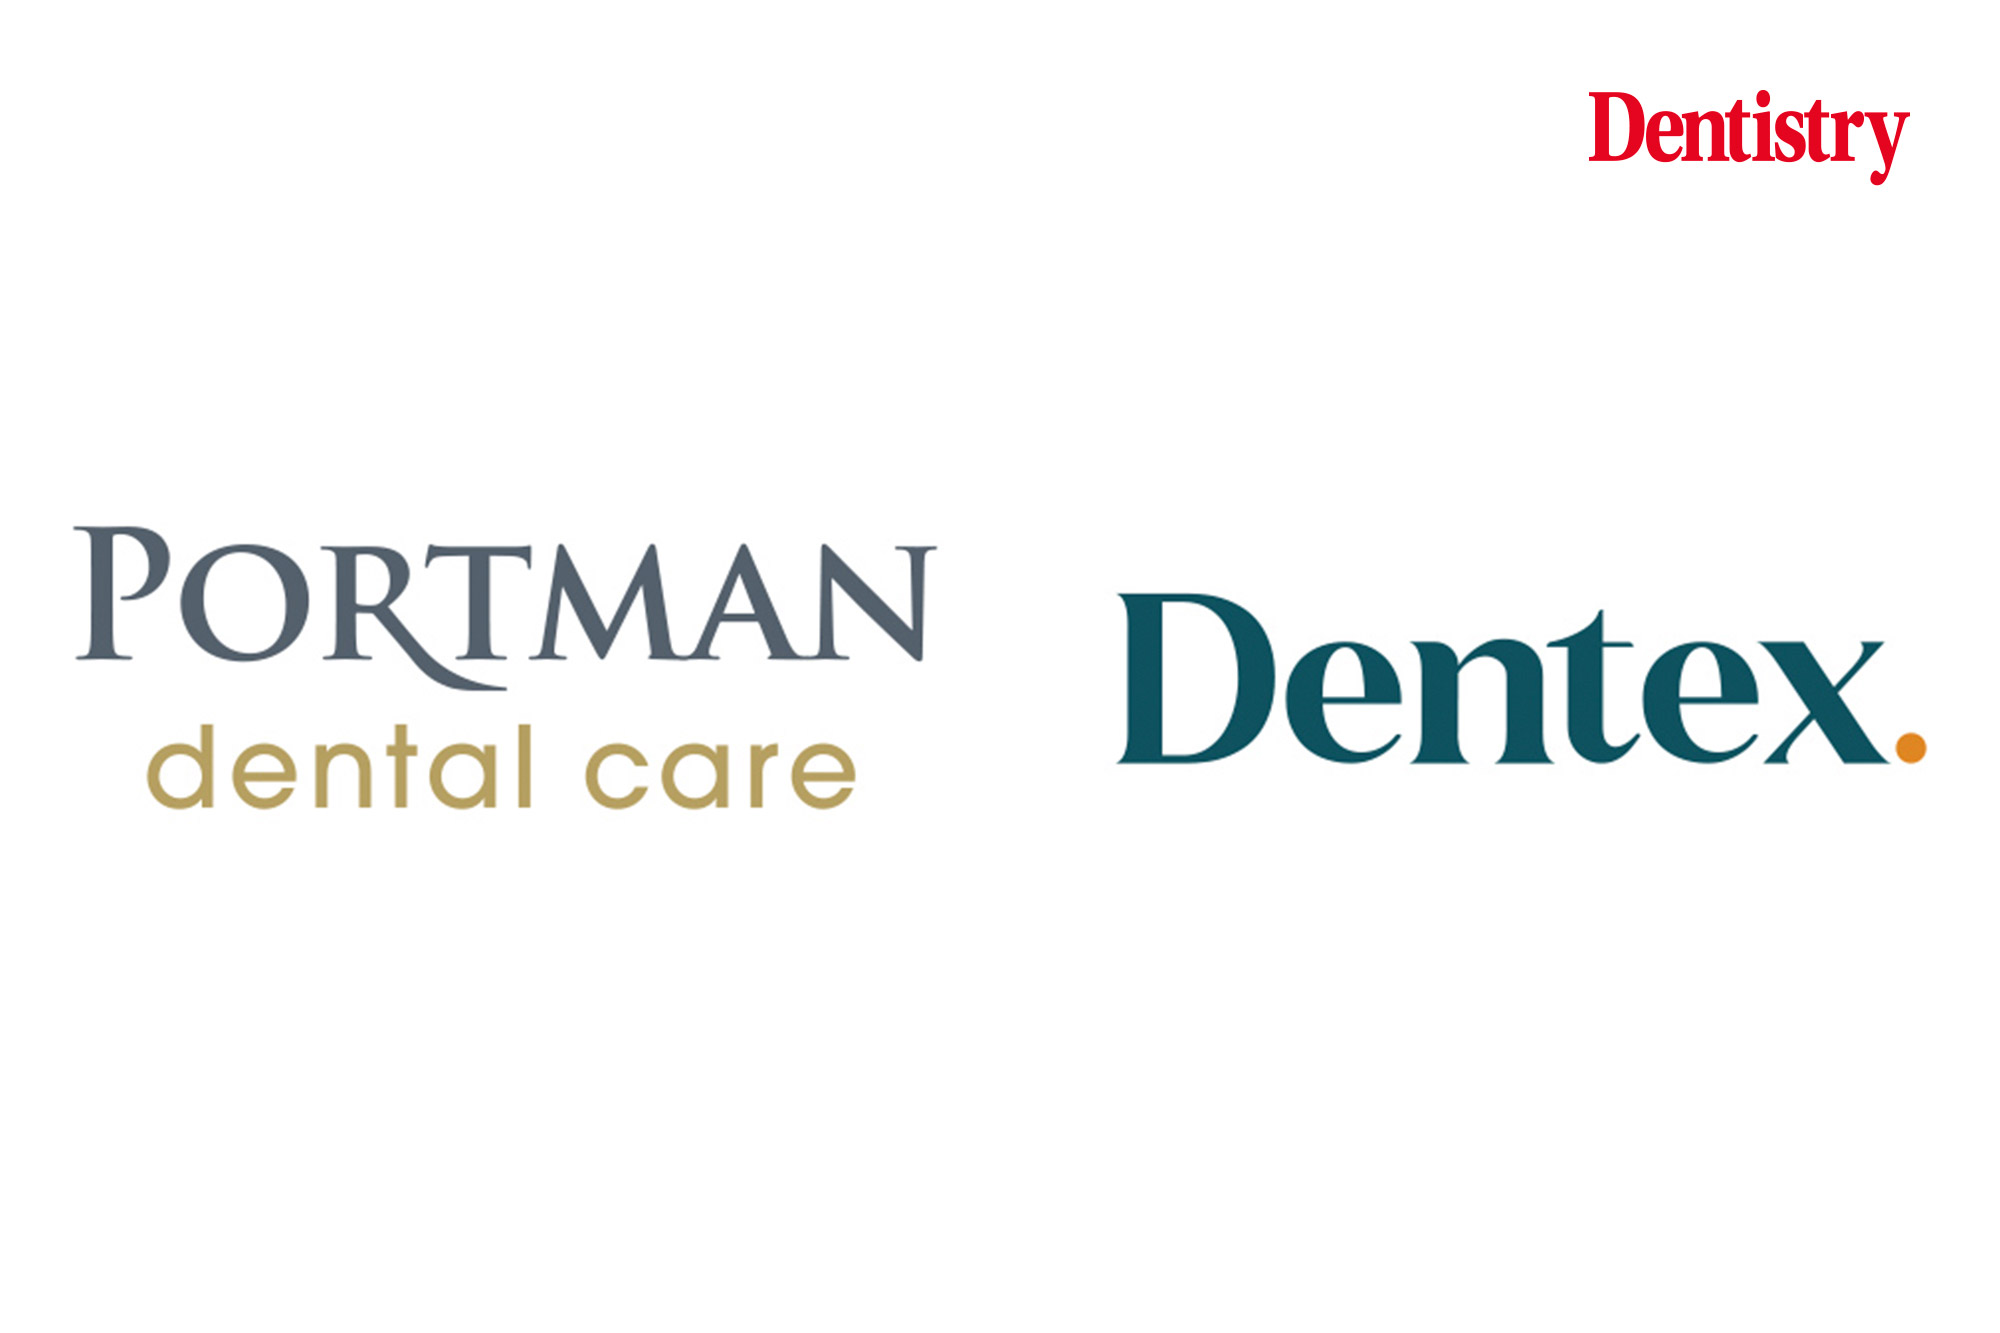 Portman Dental Care and Dentex announce merger